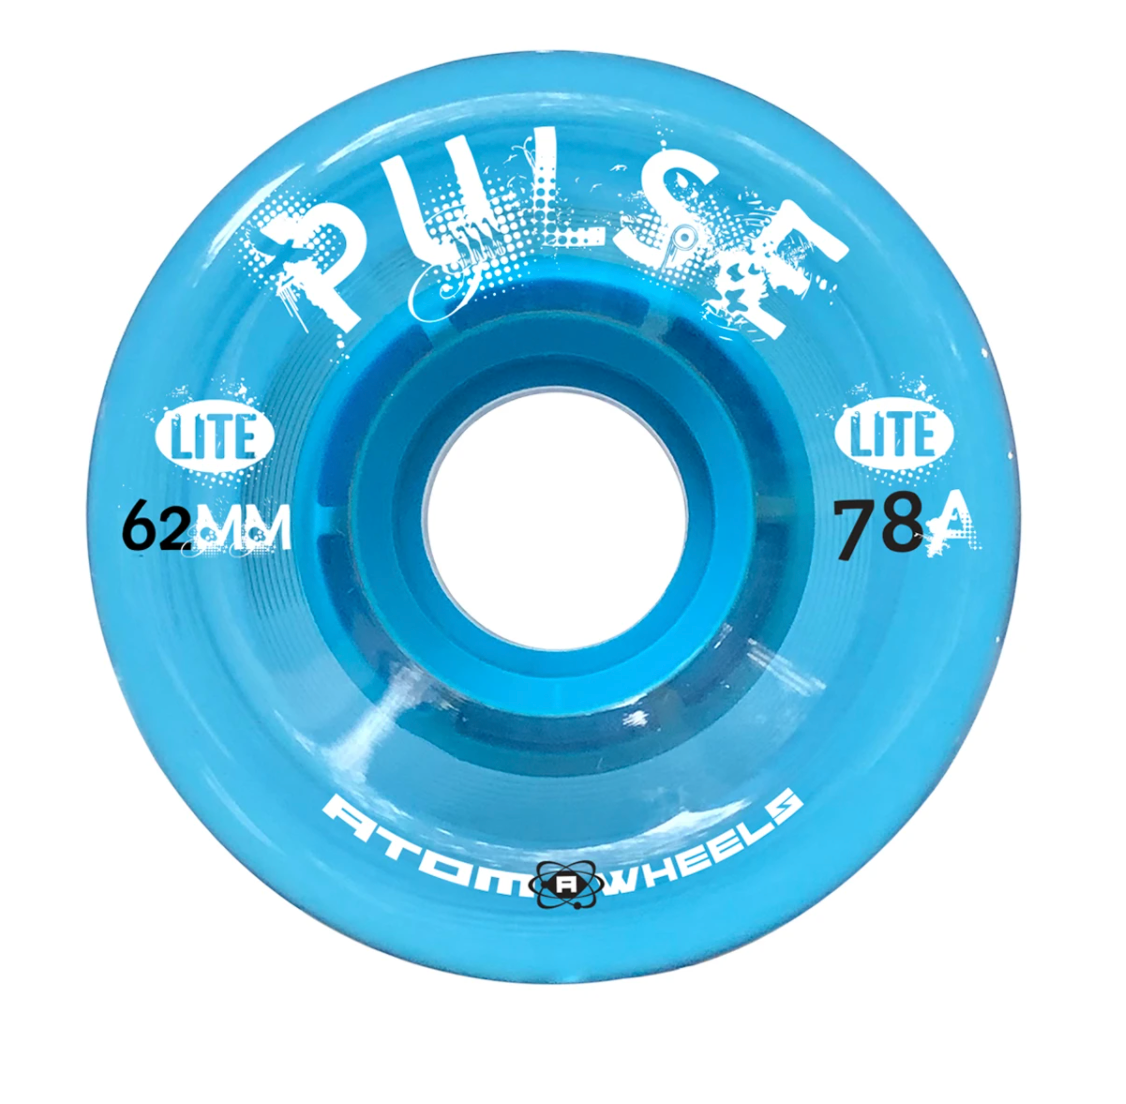 Atom Pulse Lite Outdoor Wheels 62MM 78A Blue